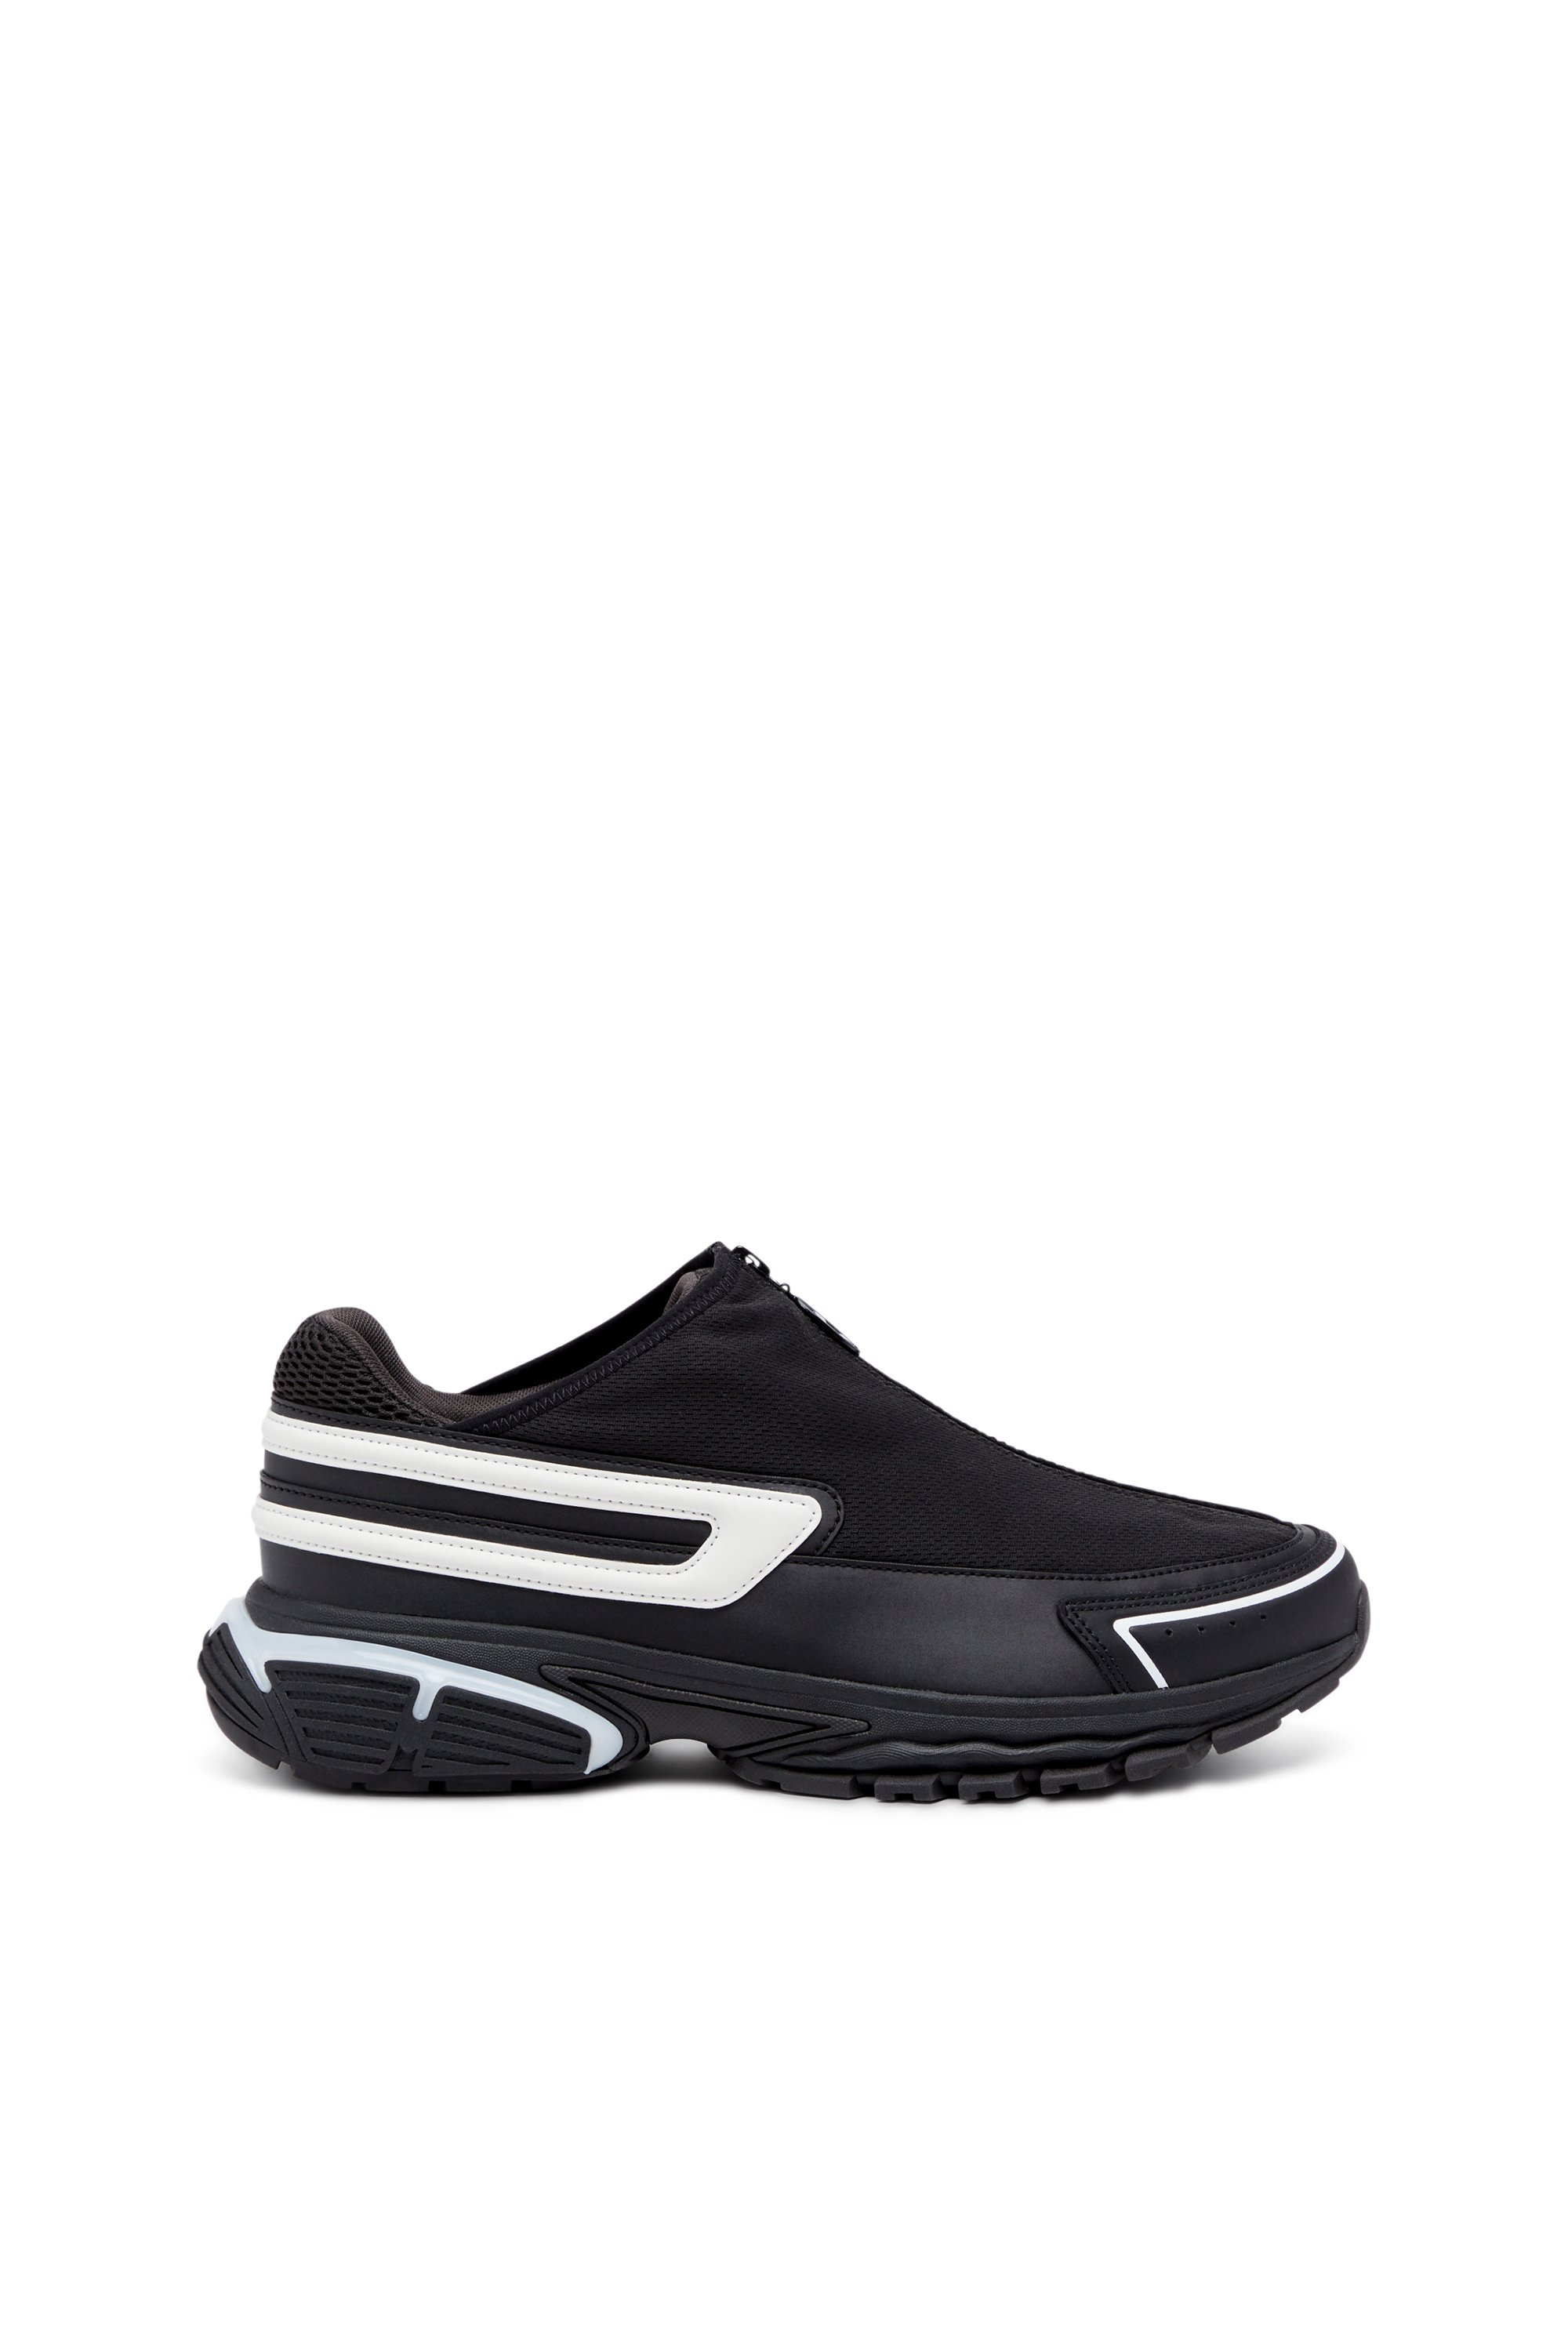 S-SERENDIPITY PRO-X1 ZIP X, Black/White - Sneakers